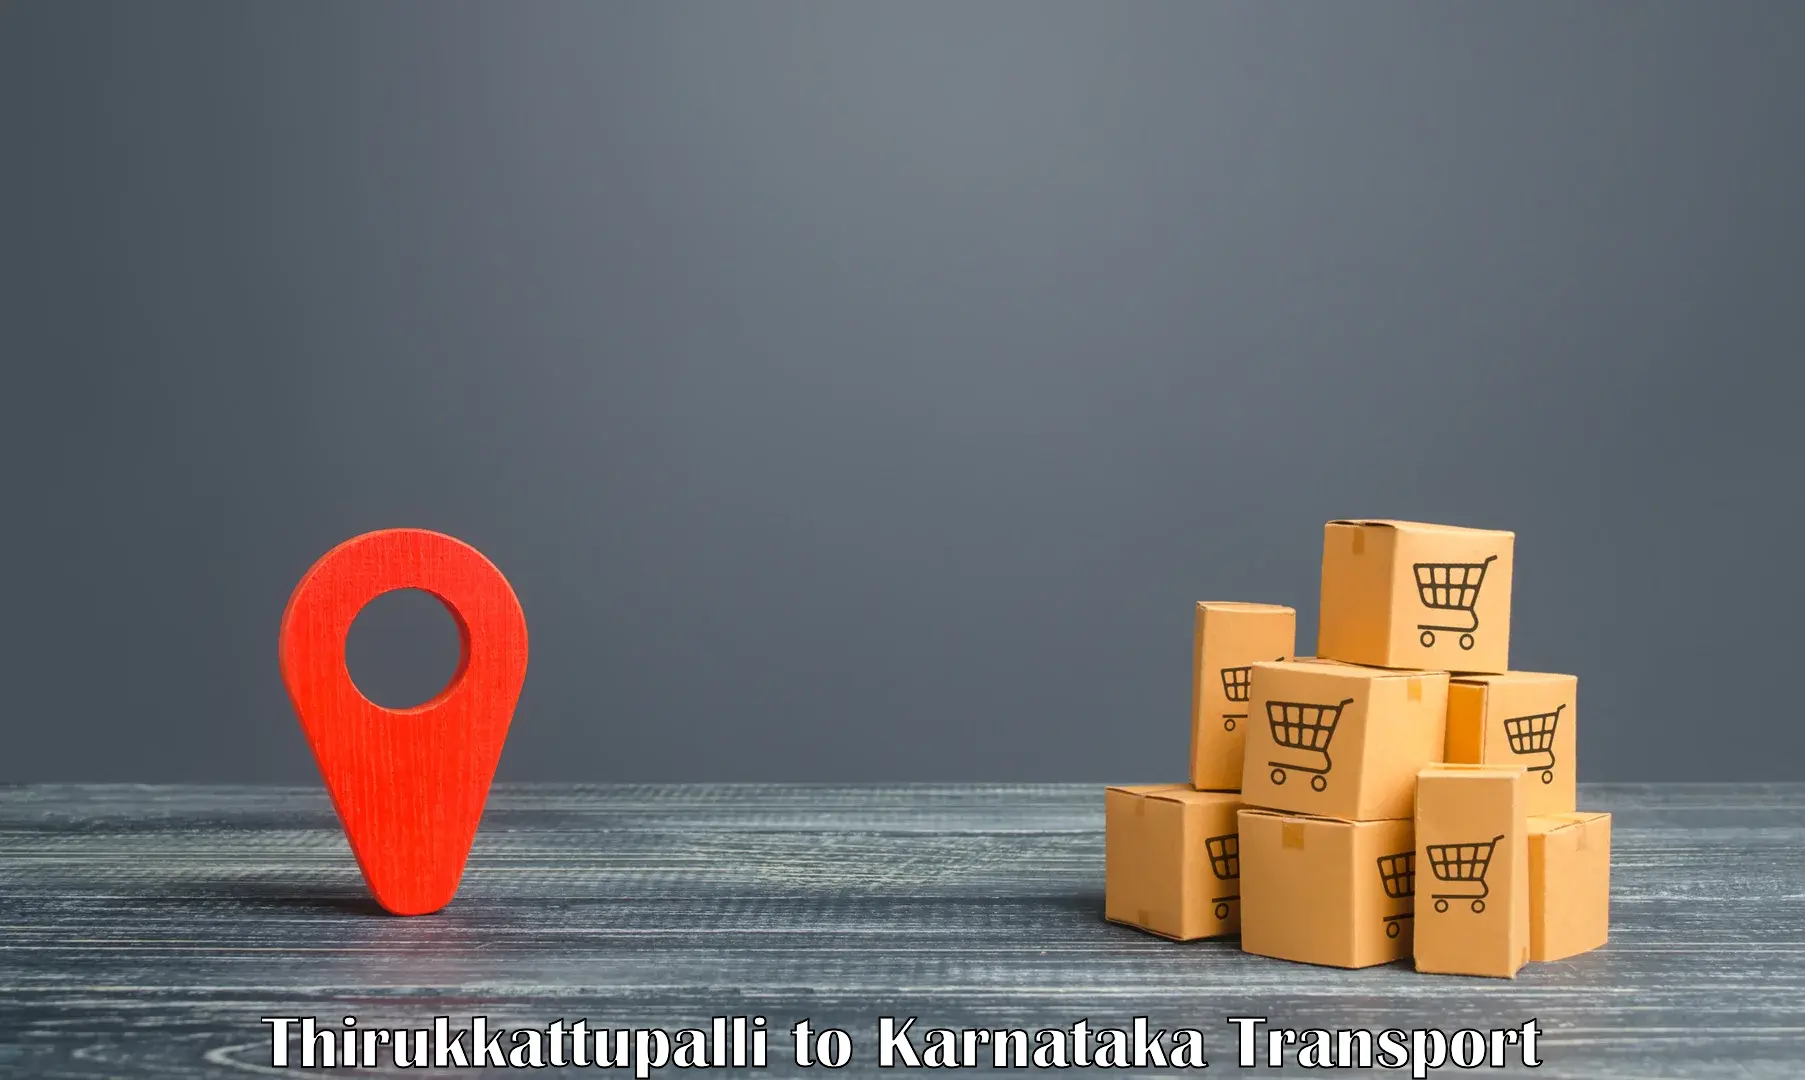 Truck transport companies in India Thirukkattupalli to Tumkur